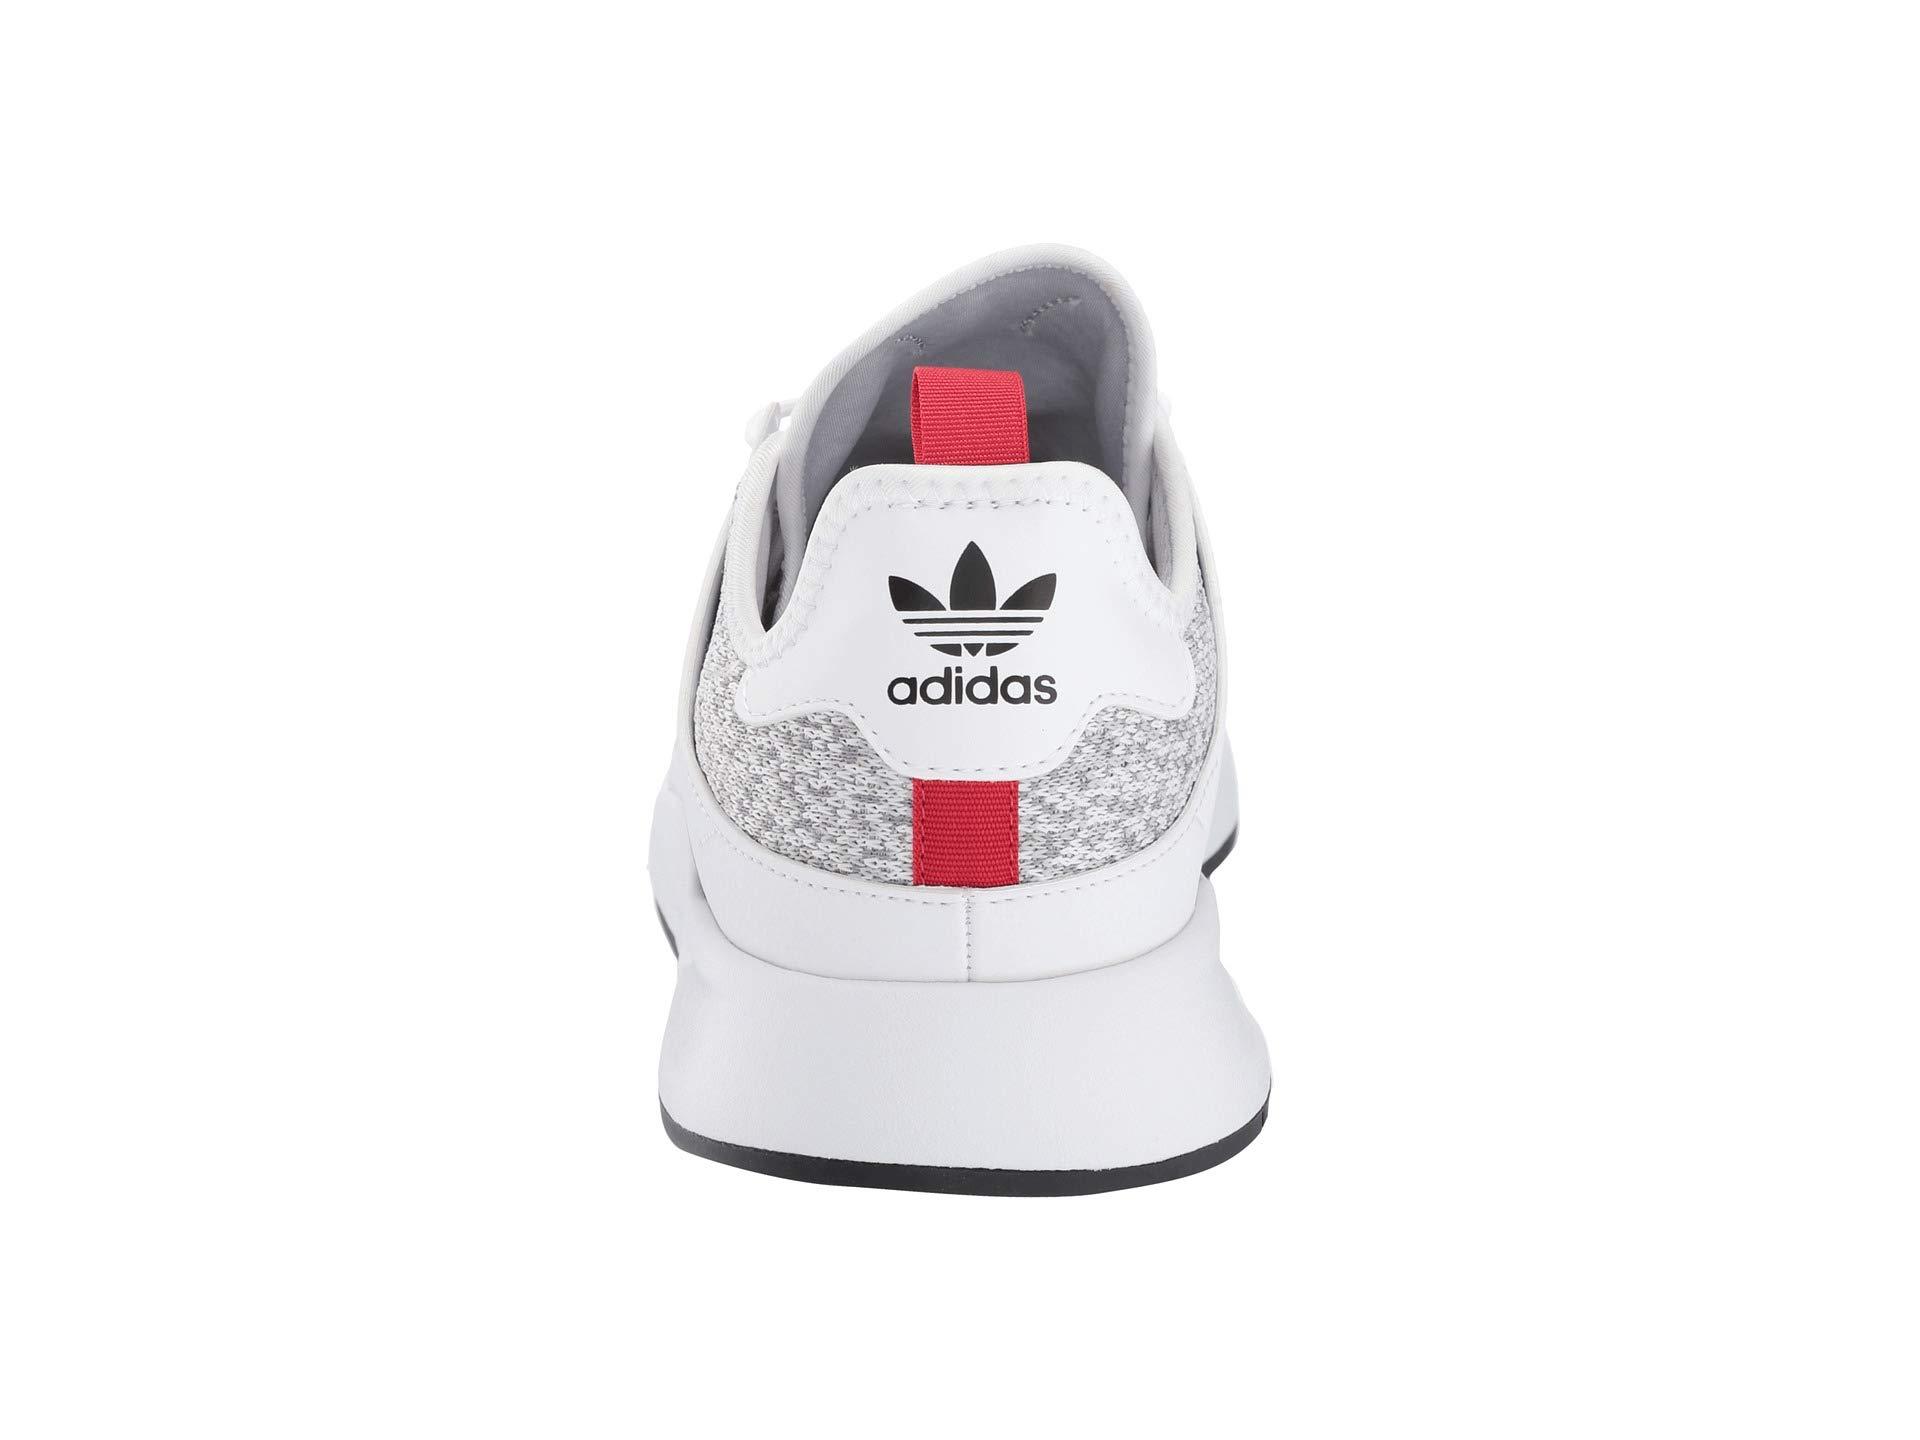 adidas men's x_plr shoes - white/grey/scarlet